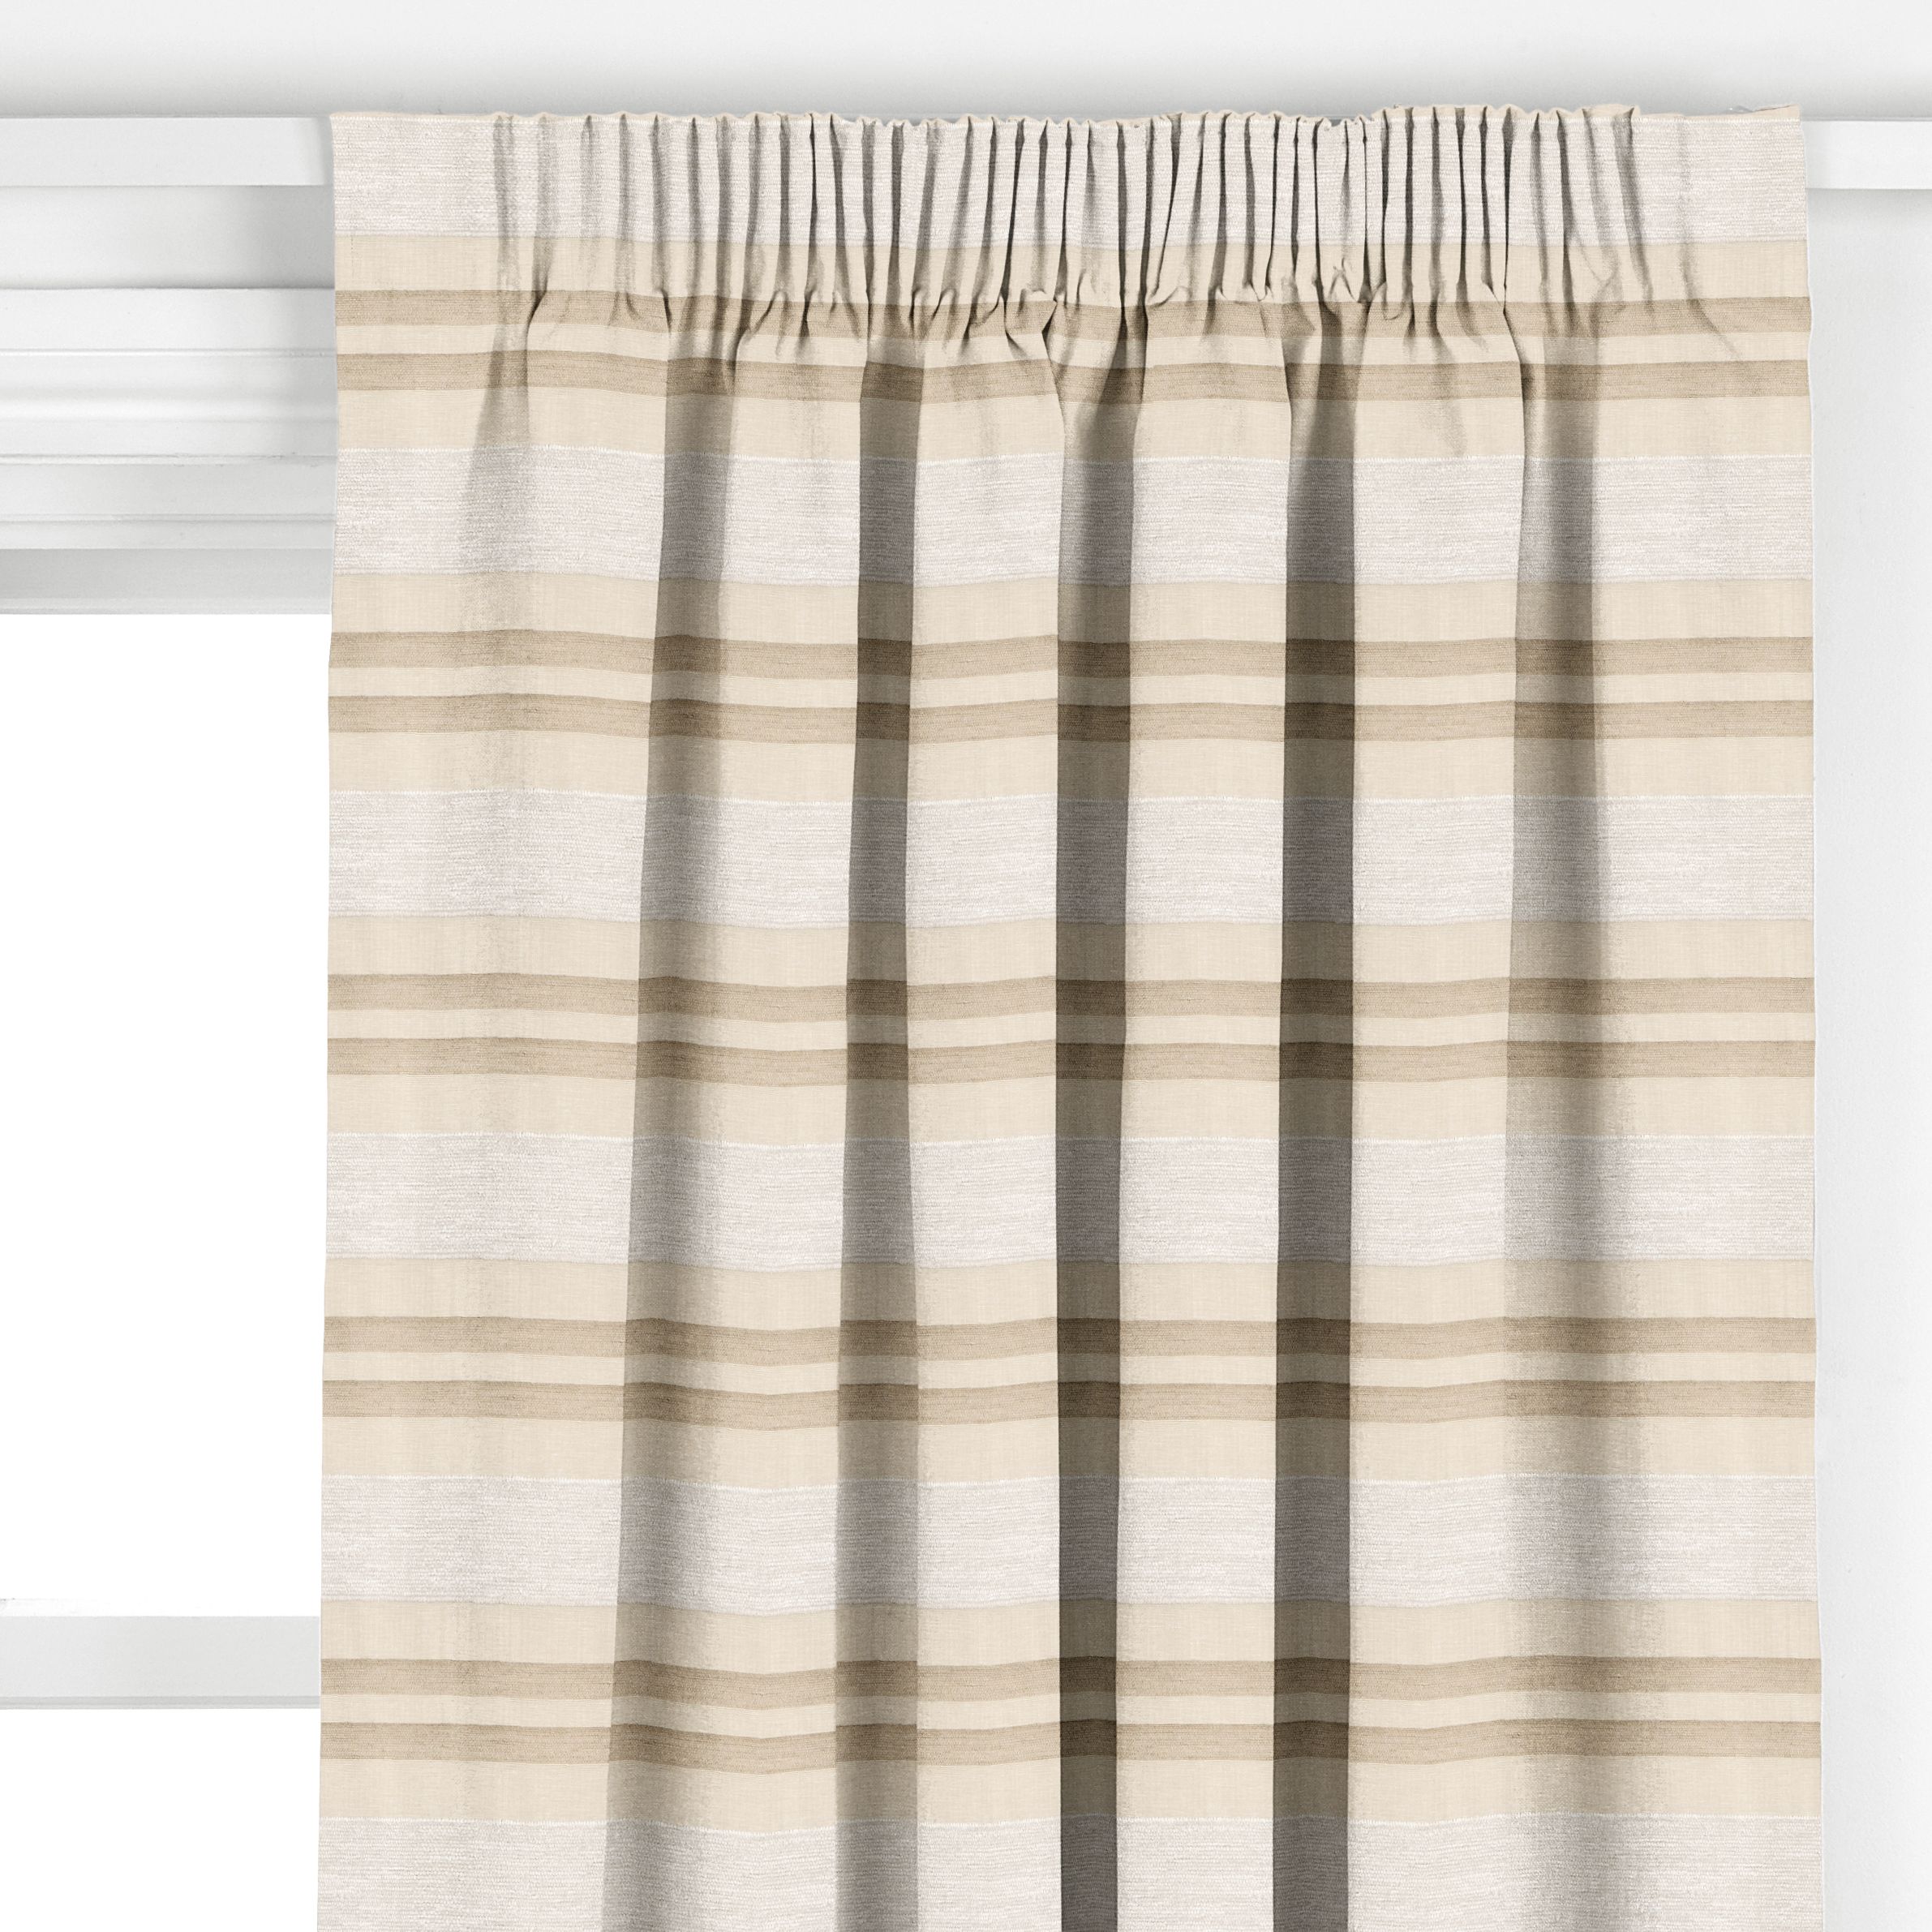 John Lewis Lovett Stripe Pencil Pleat Curtains,